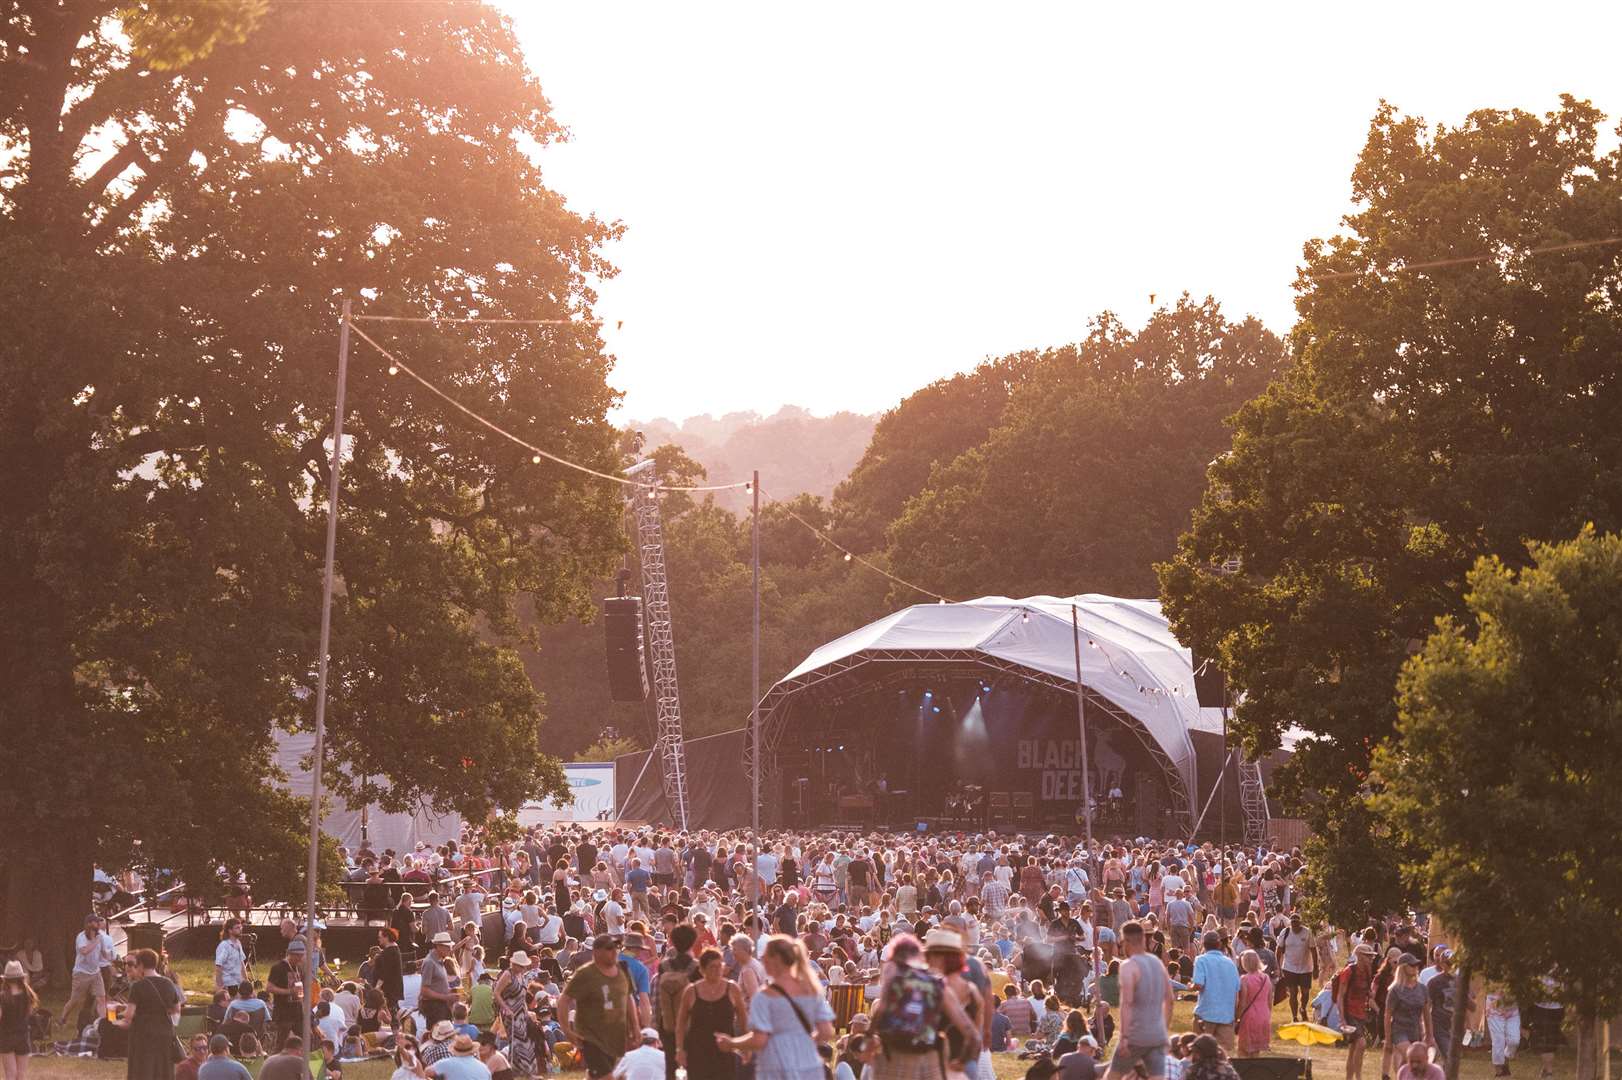 The festival takes place each summer at Eridge Park in Tunbridge Wells